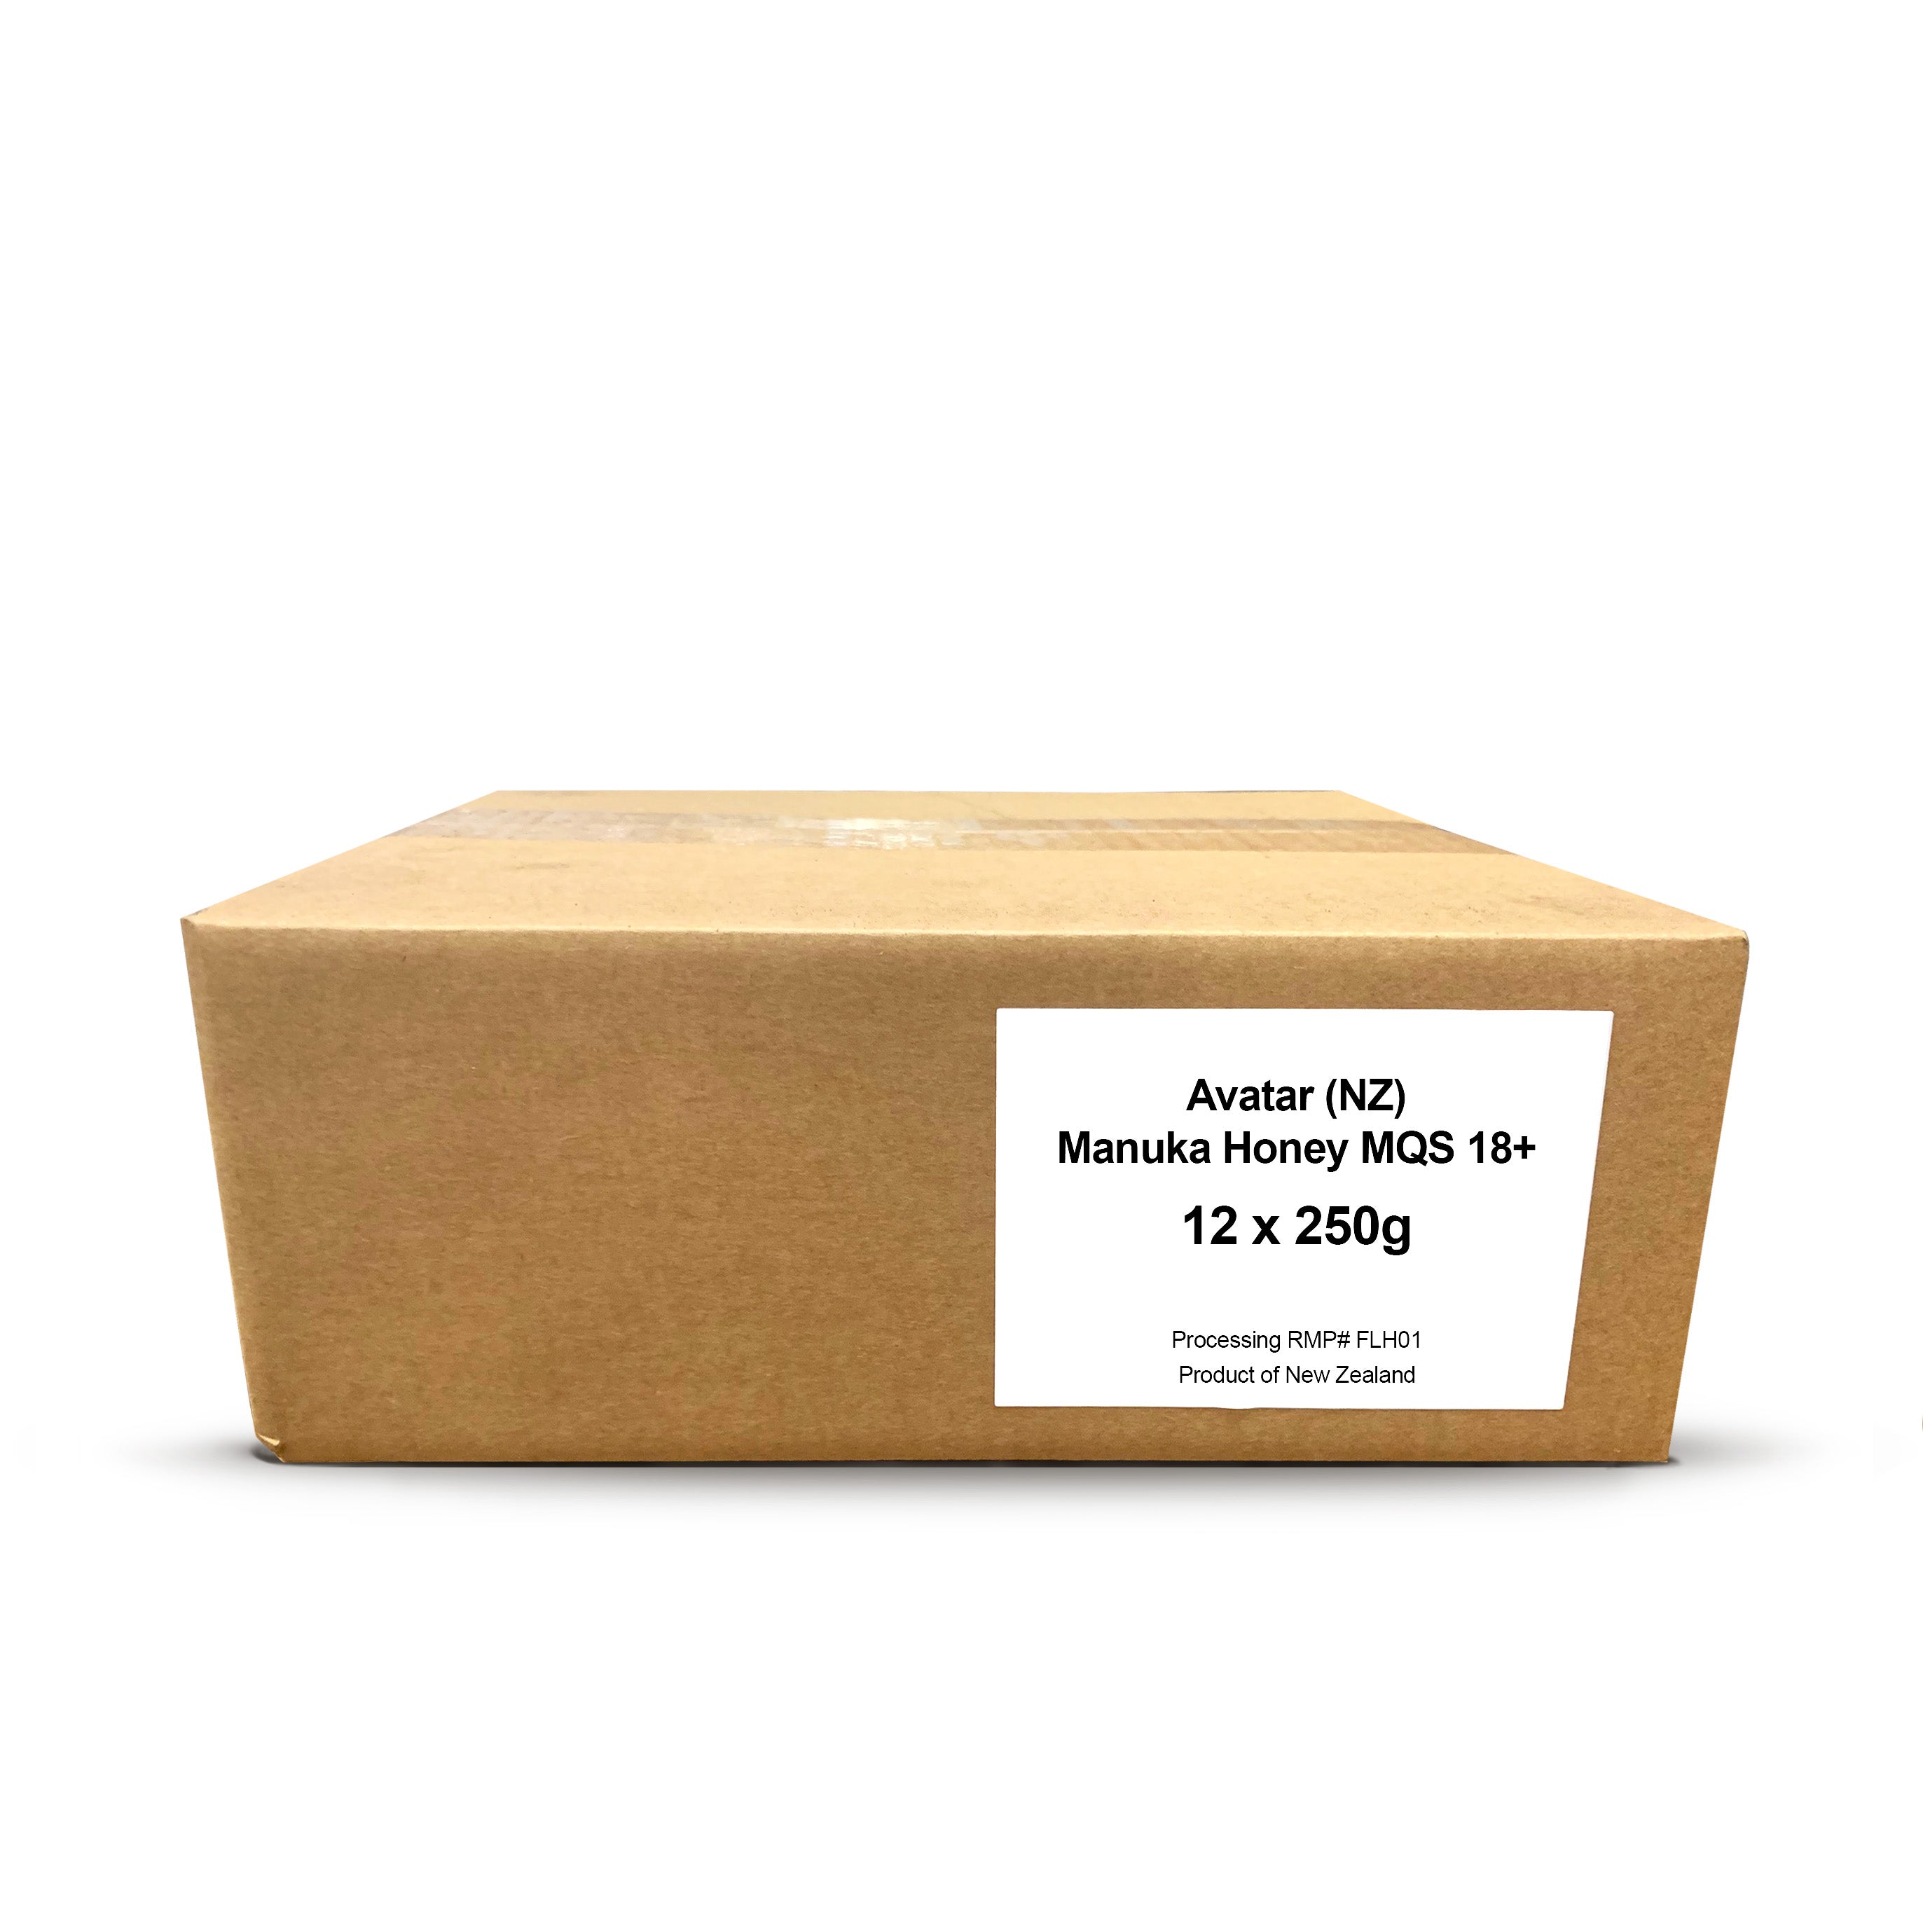 Wholesale Manuka Honey MGO700 250g | MQS18+ (12 x 250g Carton)